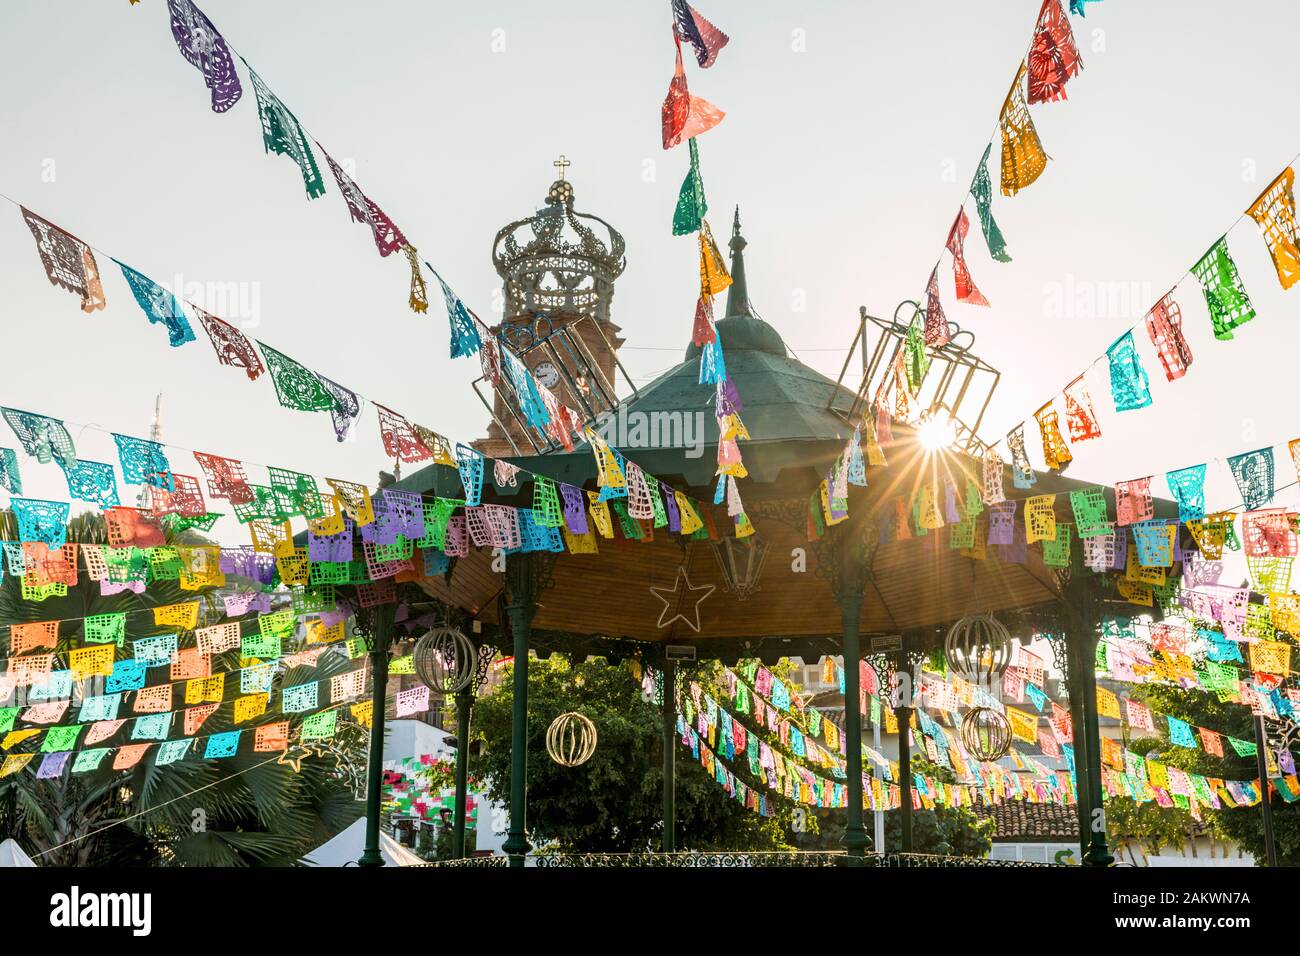 Mexiko, Puerto Vallarta, Jalisco, musikpavillon für ein Festival bei Sonnenaufgang eingerichtet Stockfoto